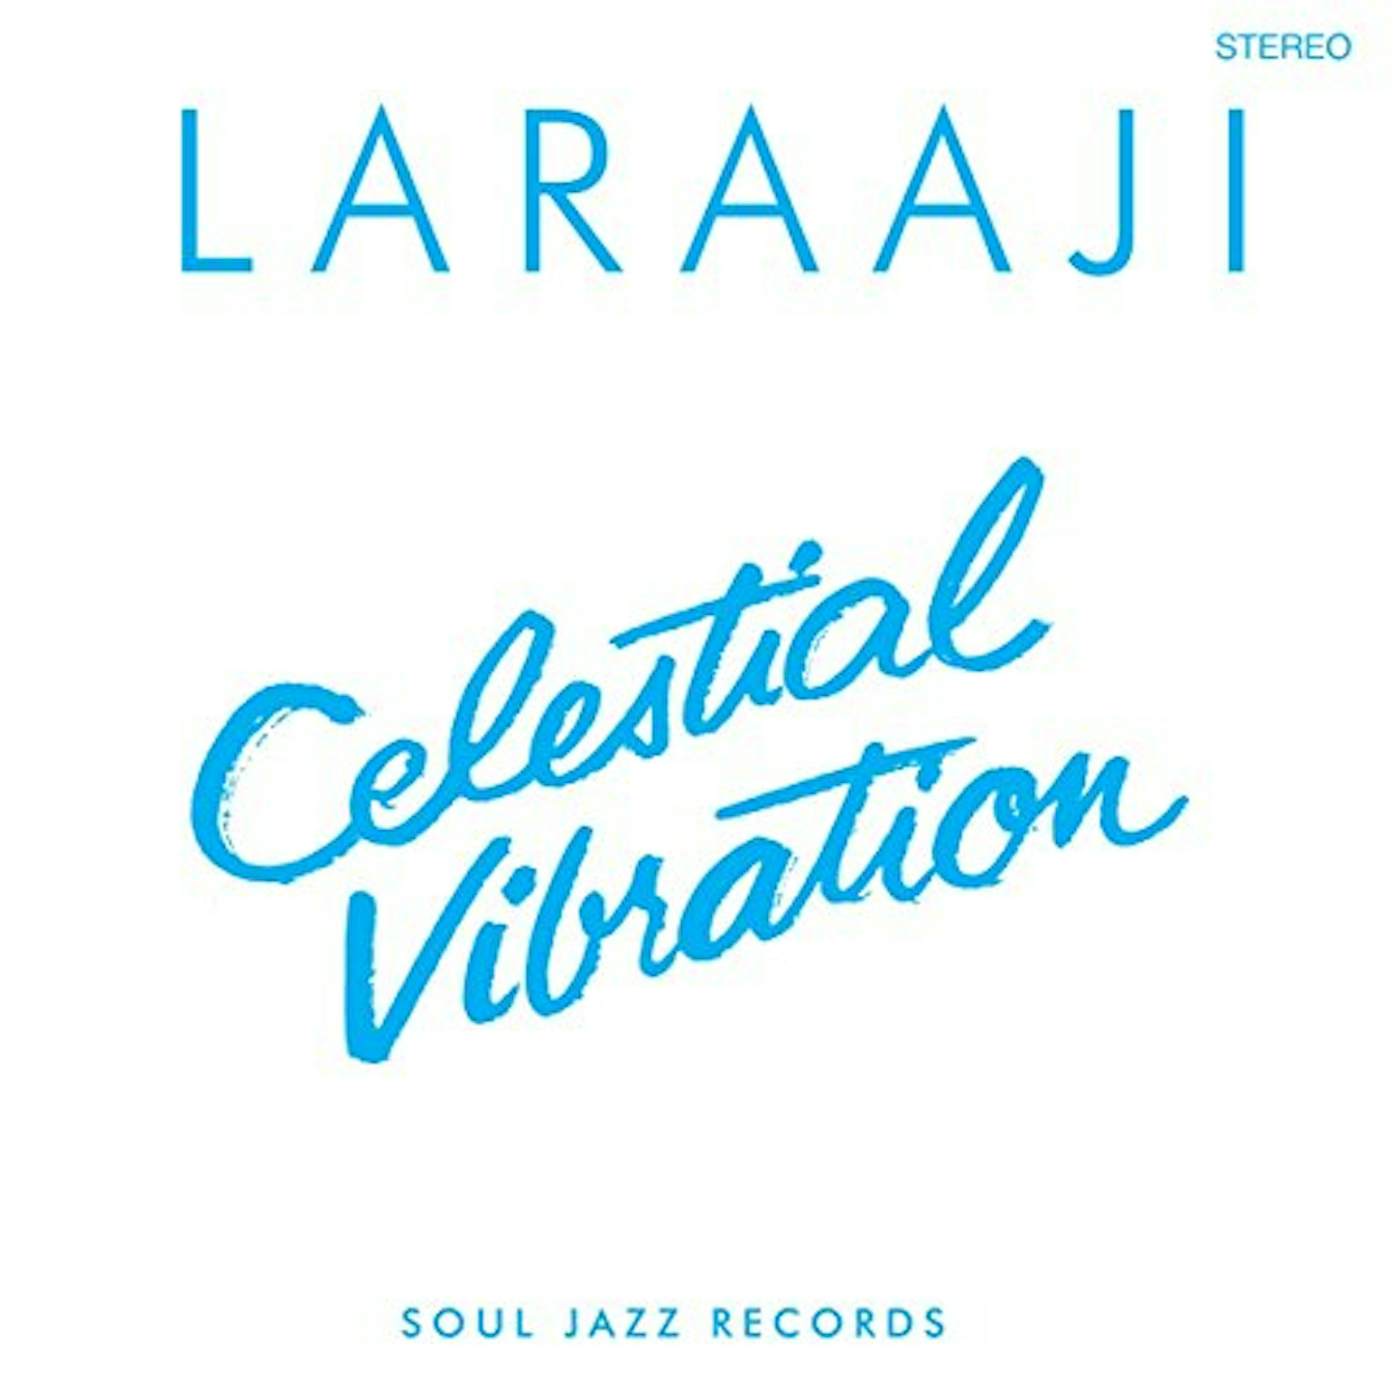 Laraaji CELESTIAL VIBRATION CD